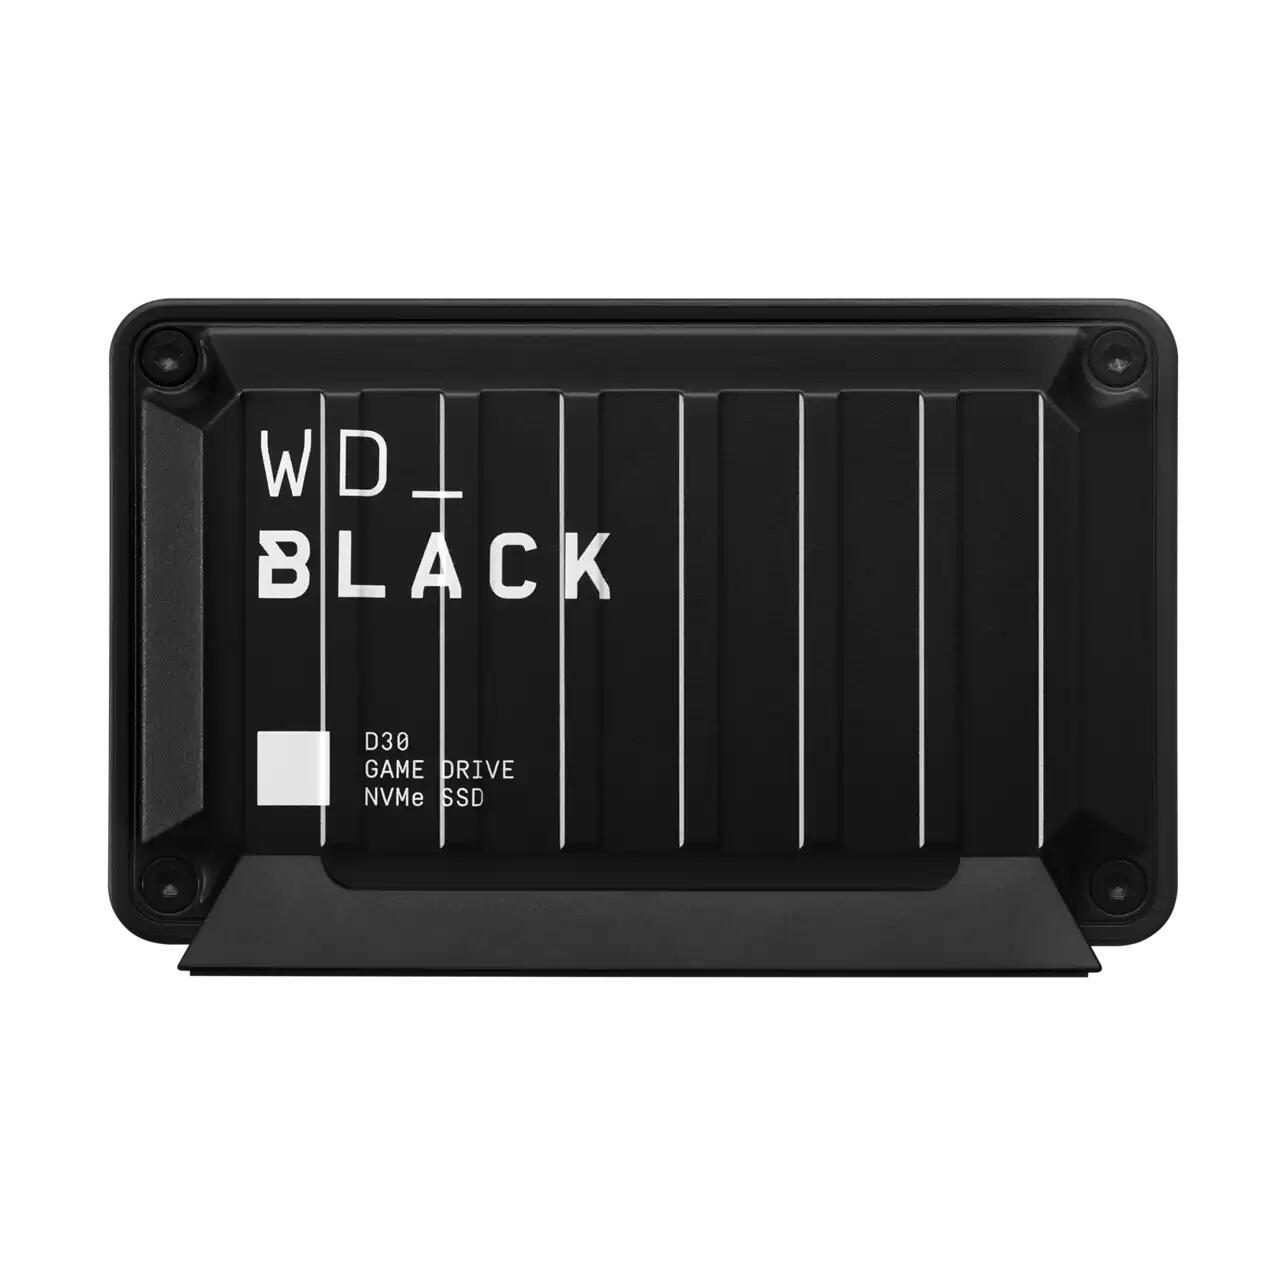 WD_BLACK™ D30 Game Drive SSD - 2 TB von Western Digital